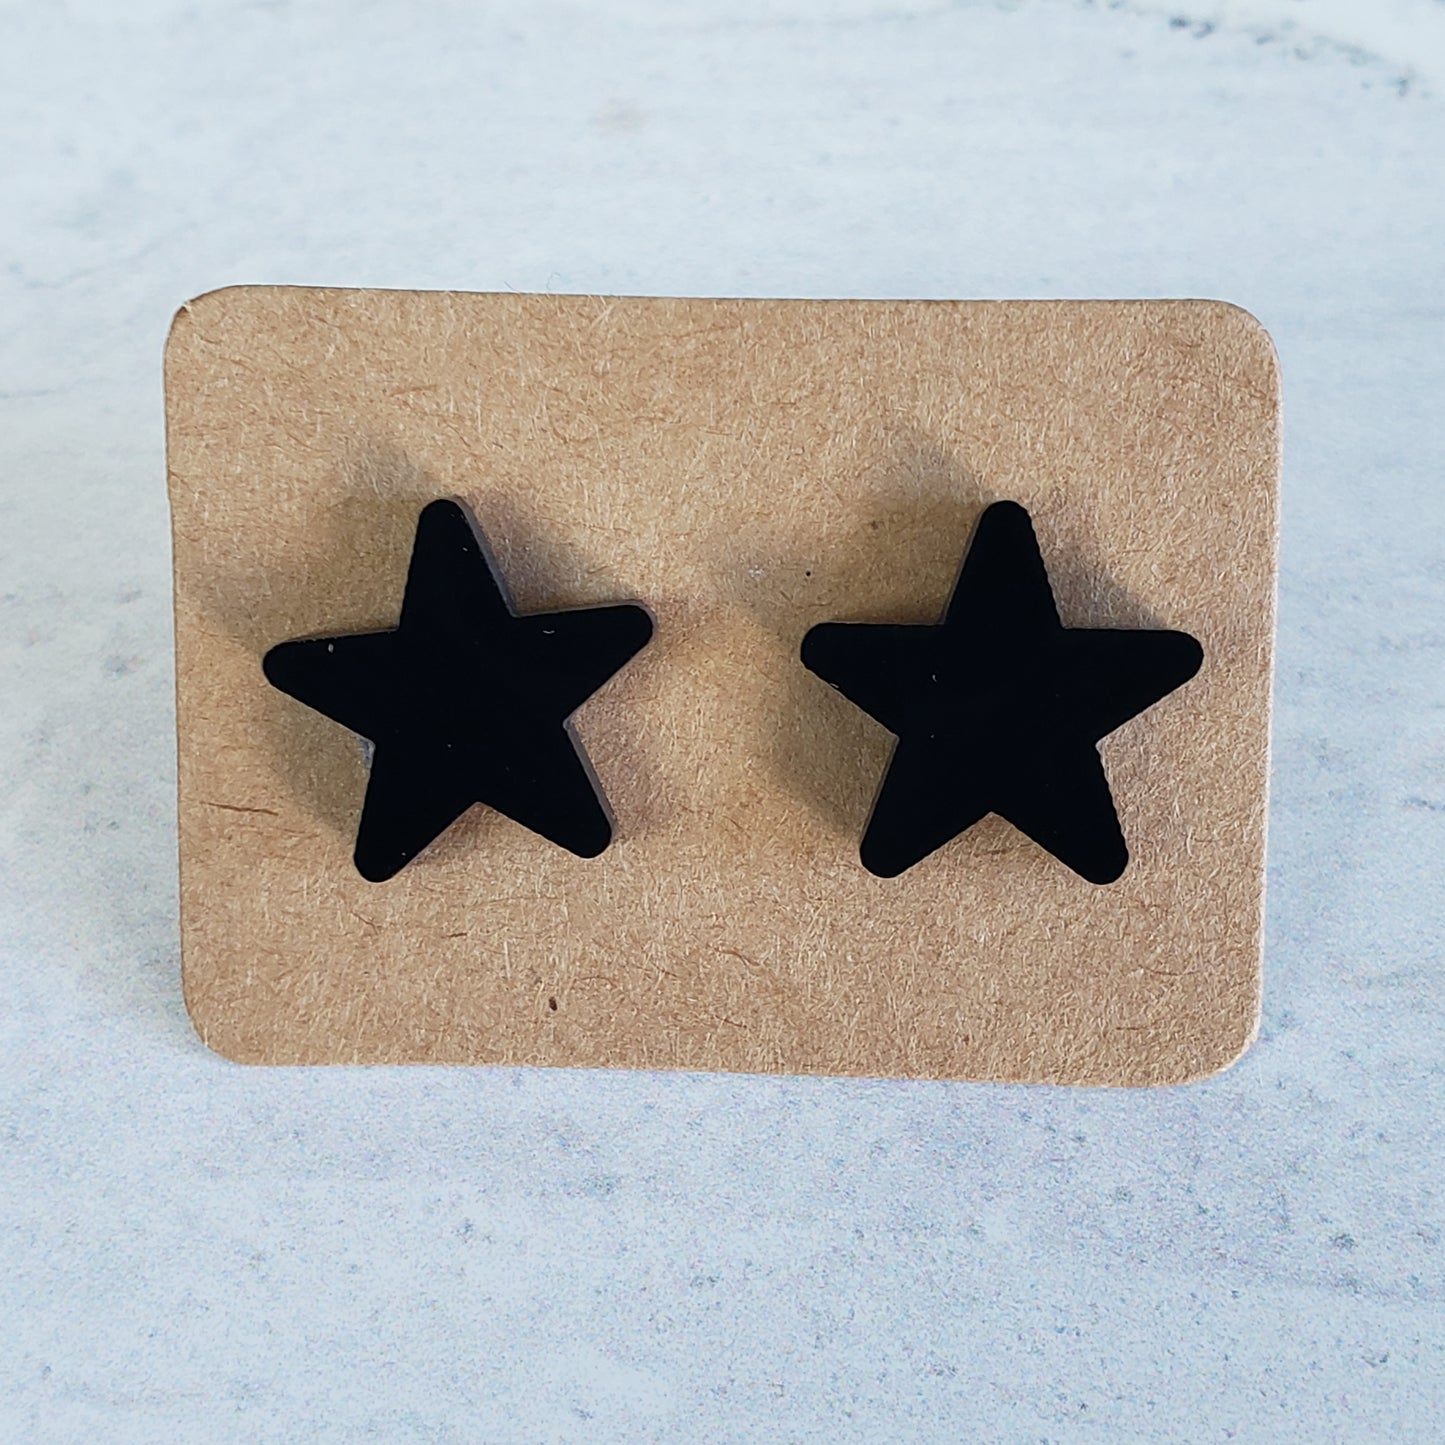 Black star stud earrings on earring card